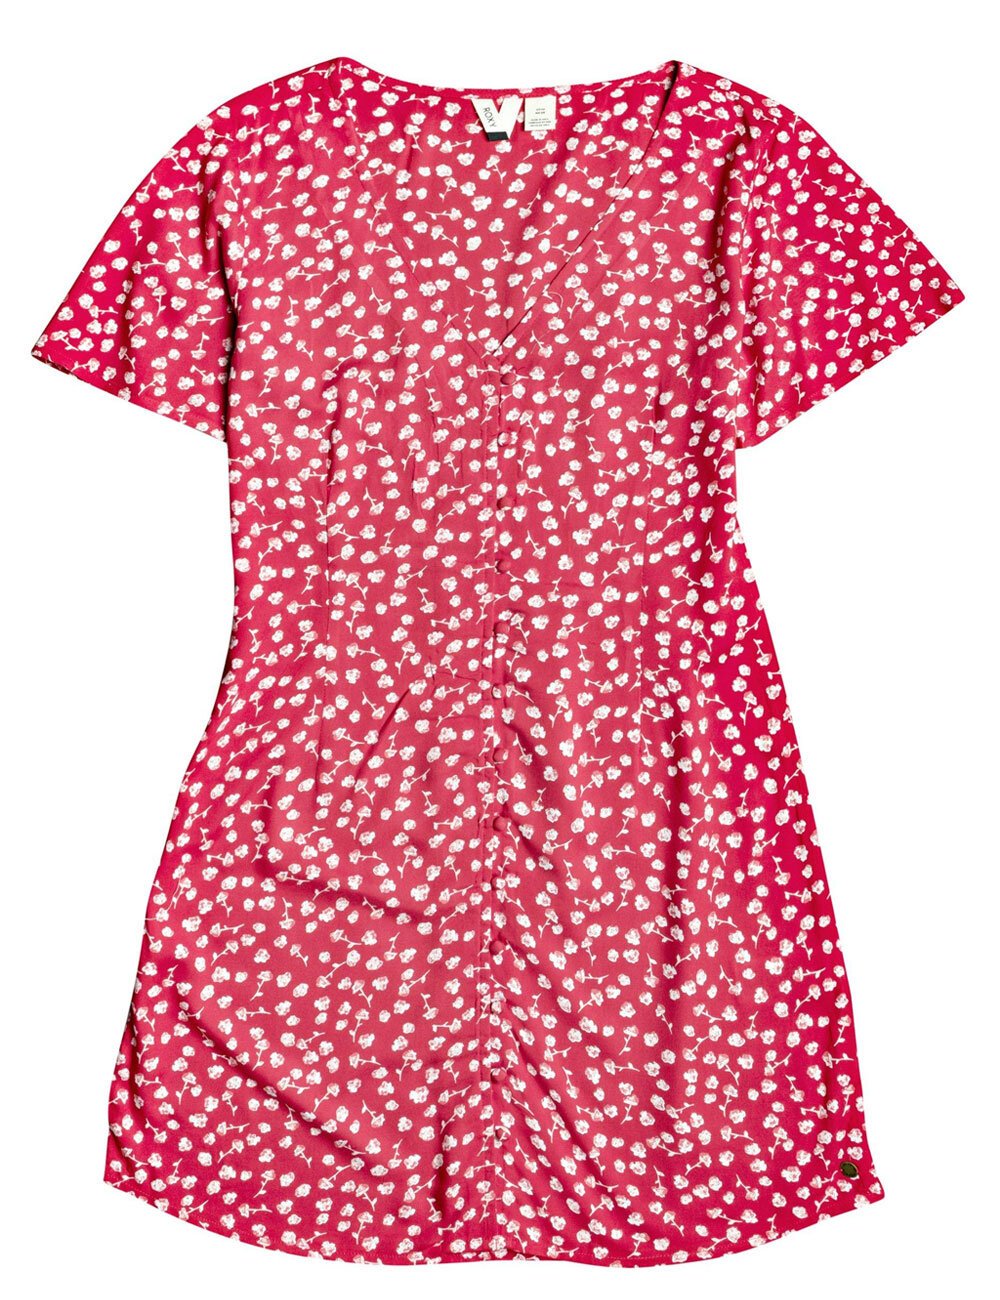 DAMAGE LOVE DRESS - Buy Women's Dresses NZ - Free Shipping Over $70 ...